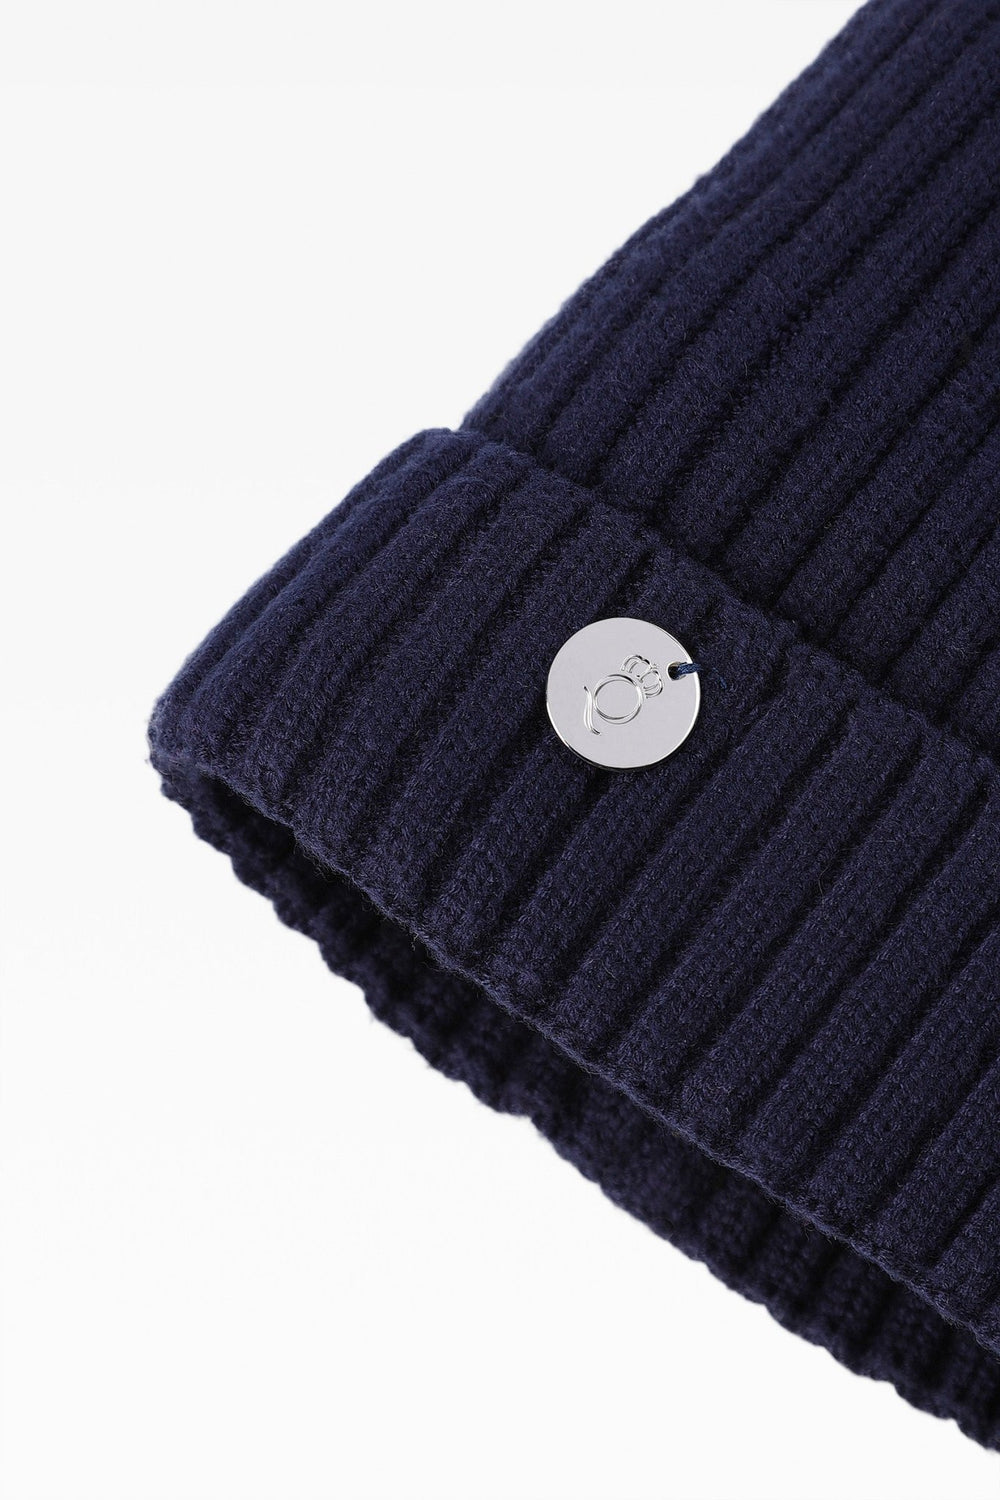 Charlie Rib Pom Pom Hat with Fleece Band - Real Fur - Dunedin Cashmere